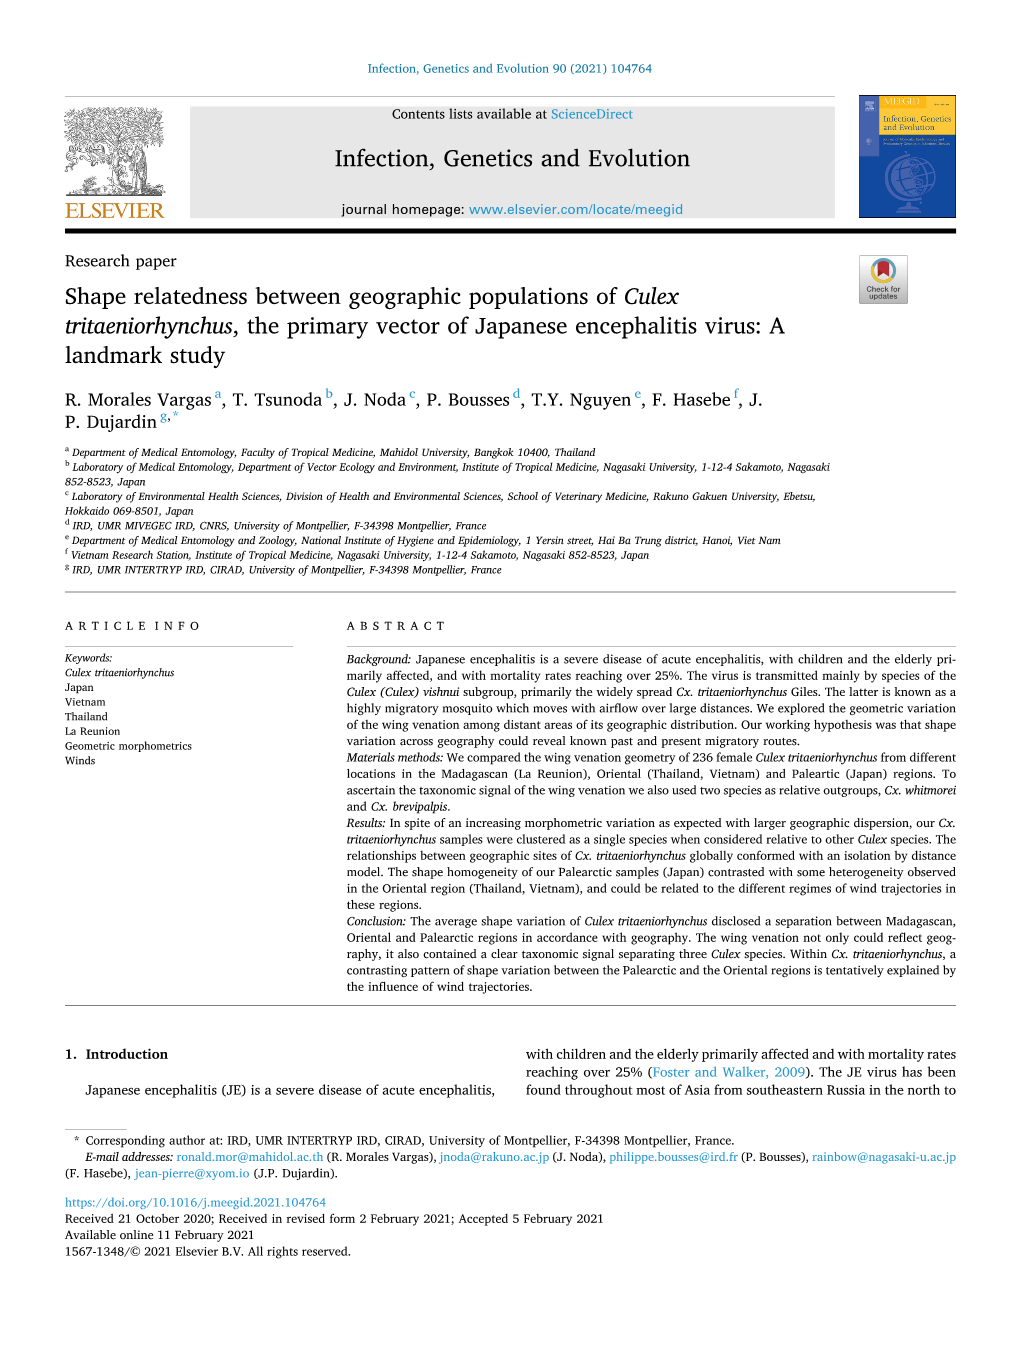 Shape Relatedness Between Geographic Populations of Culex Tritaeniorhynchus, the Primary Vector of Japanese Encephalitis Virus: a Landmark Study